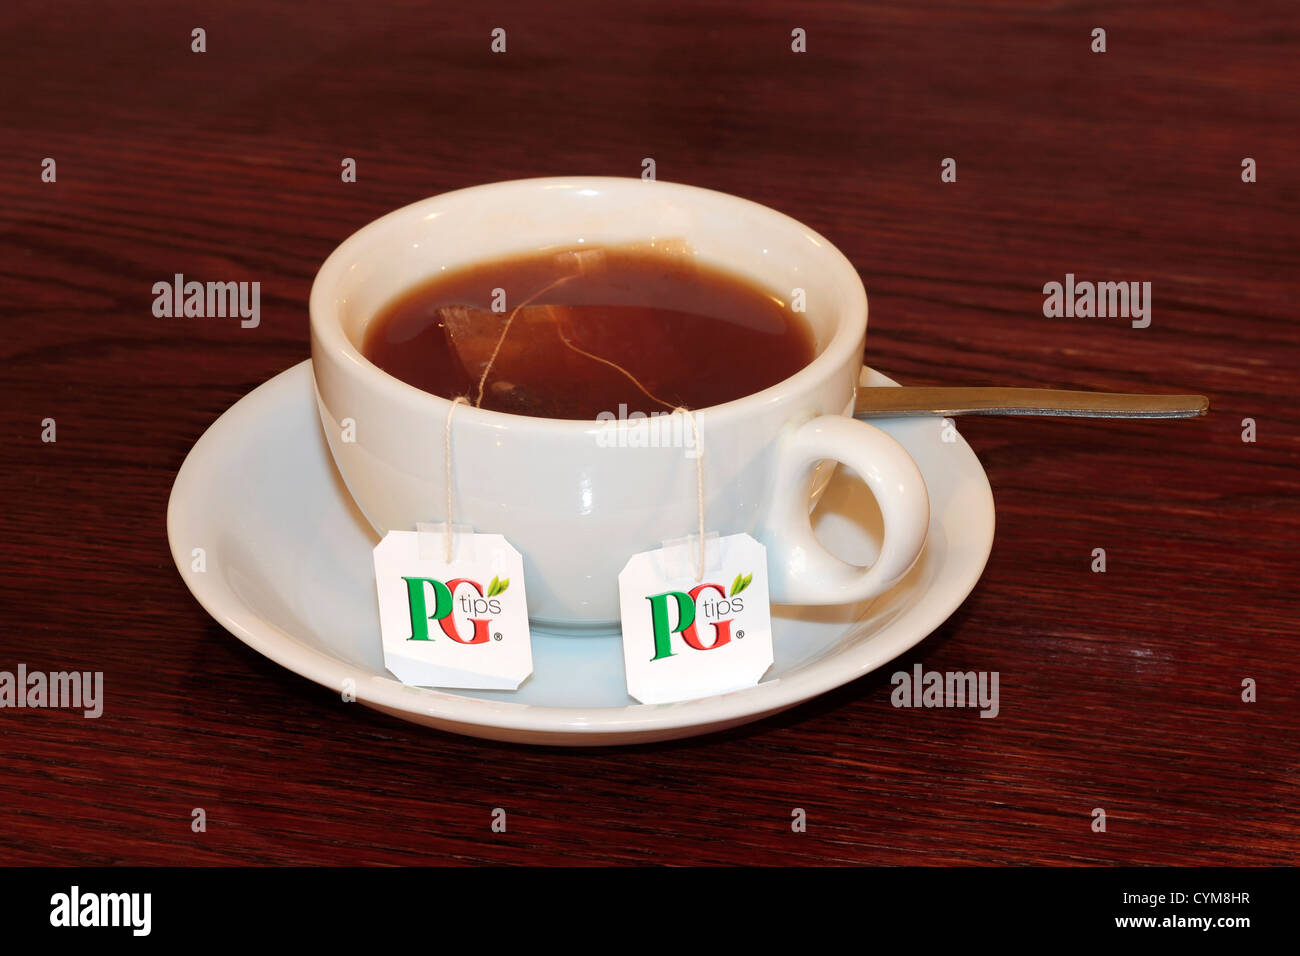 Pg tips fotografías e imágenes de alta resolución - Alamy